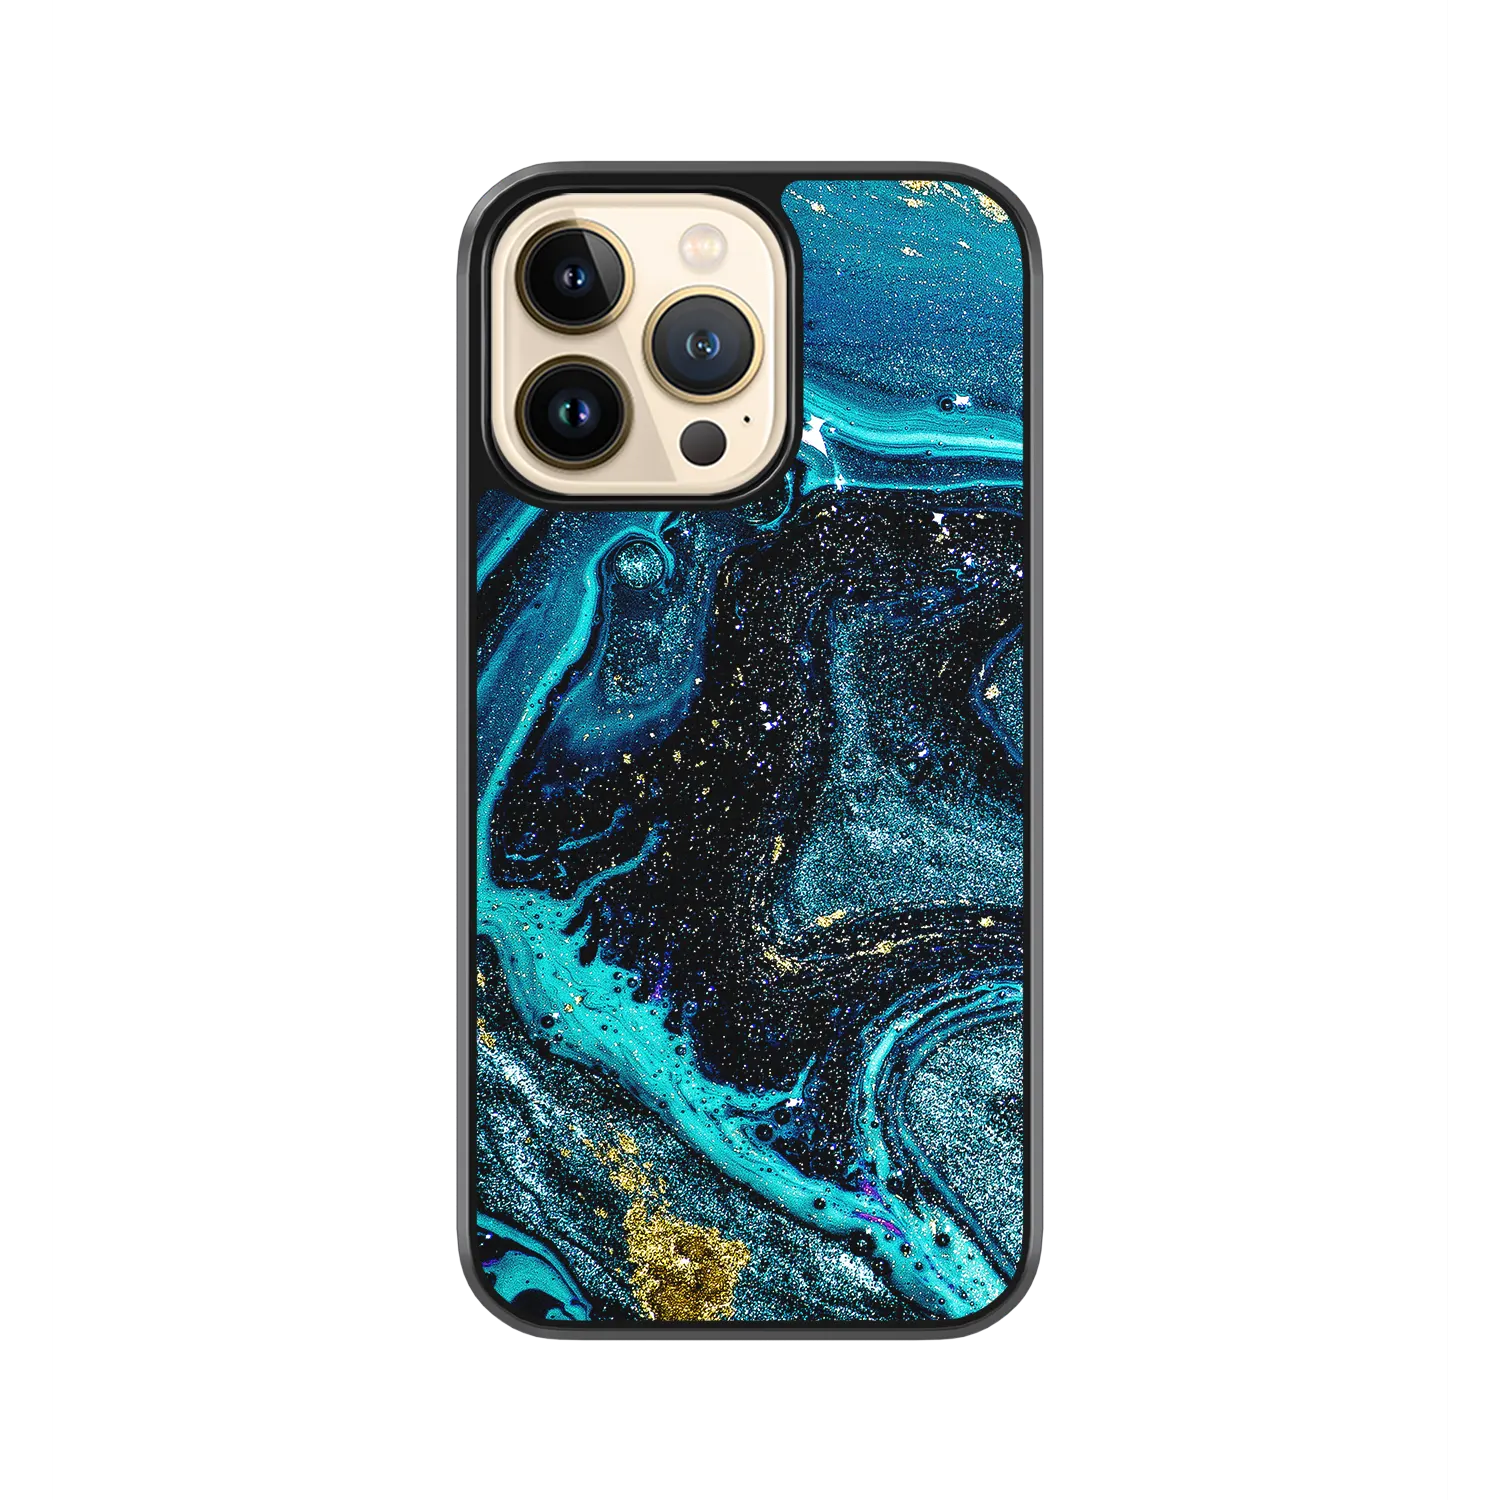 Poseidon iphone 11 pro cover